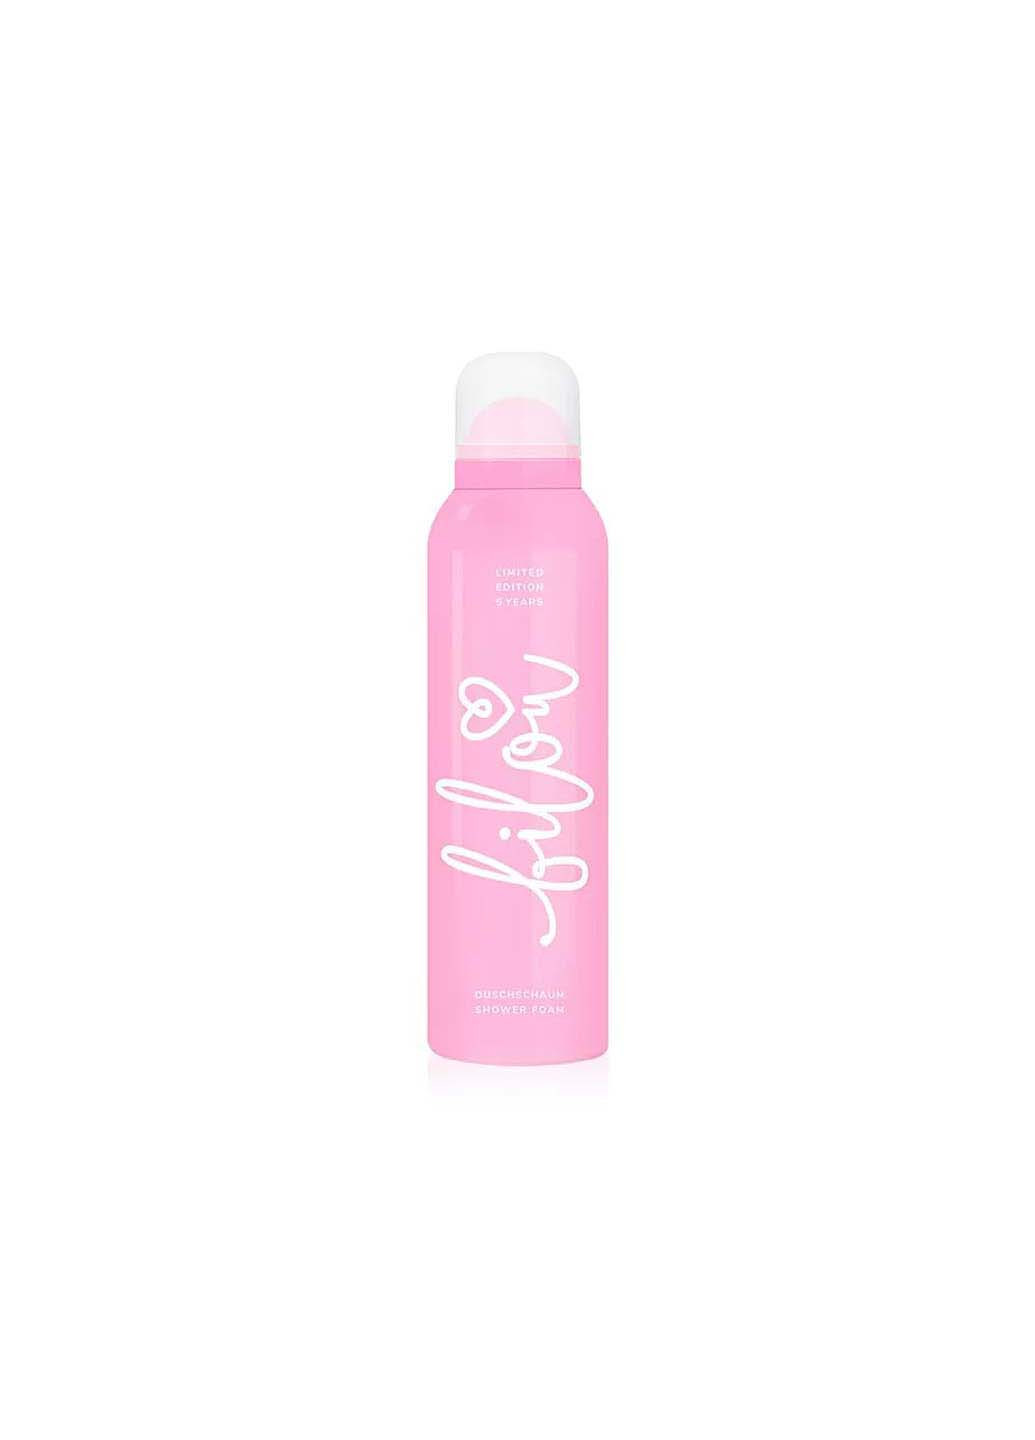 Пенка для душа Limited Edition 5 Years розовая пенка сладкий фруктовый аромат 200 мл Bilou (276057178)